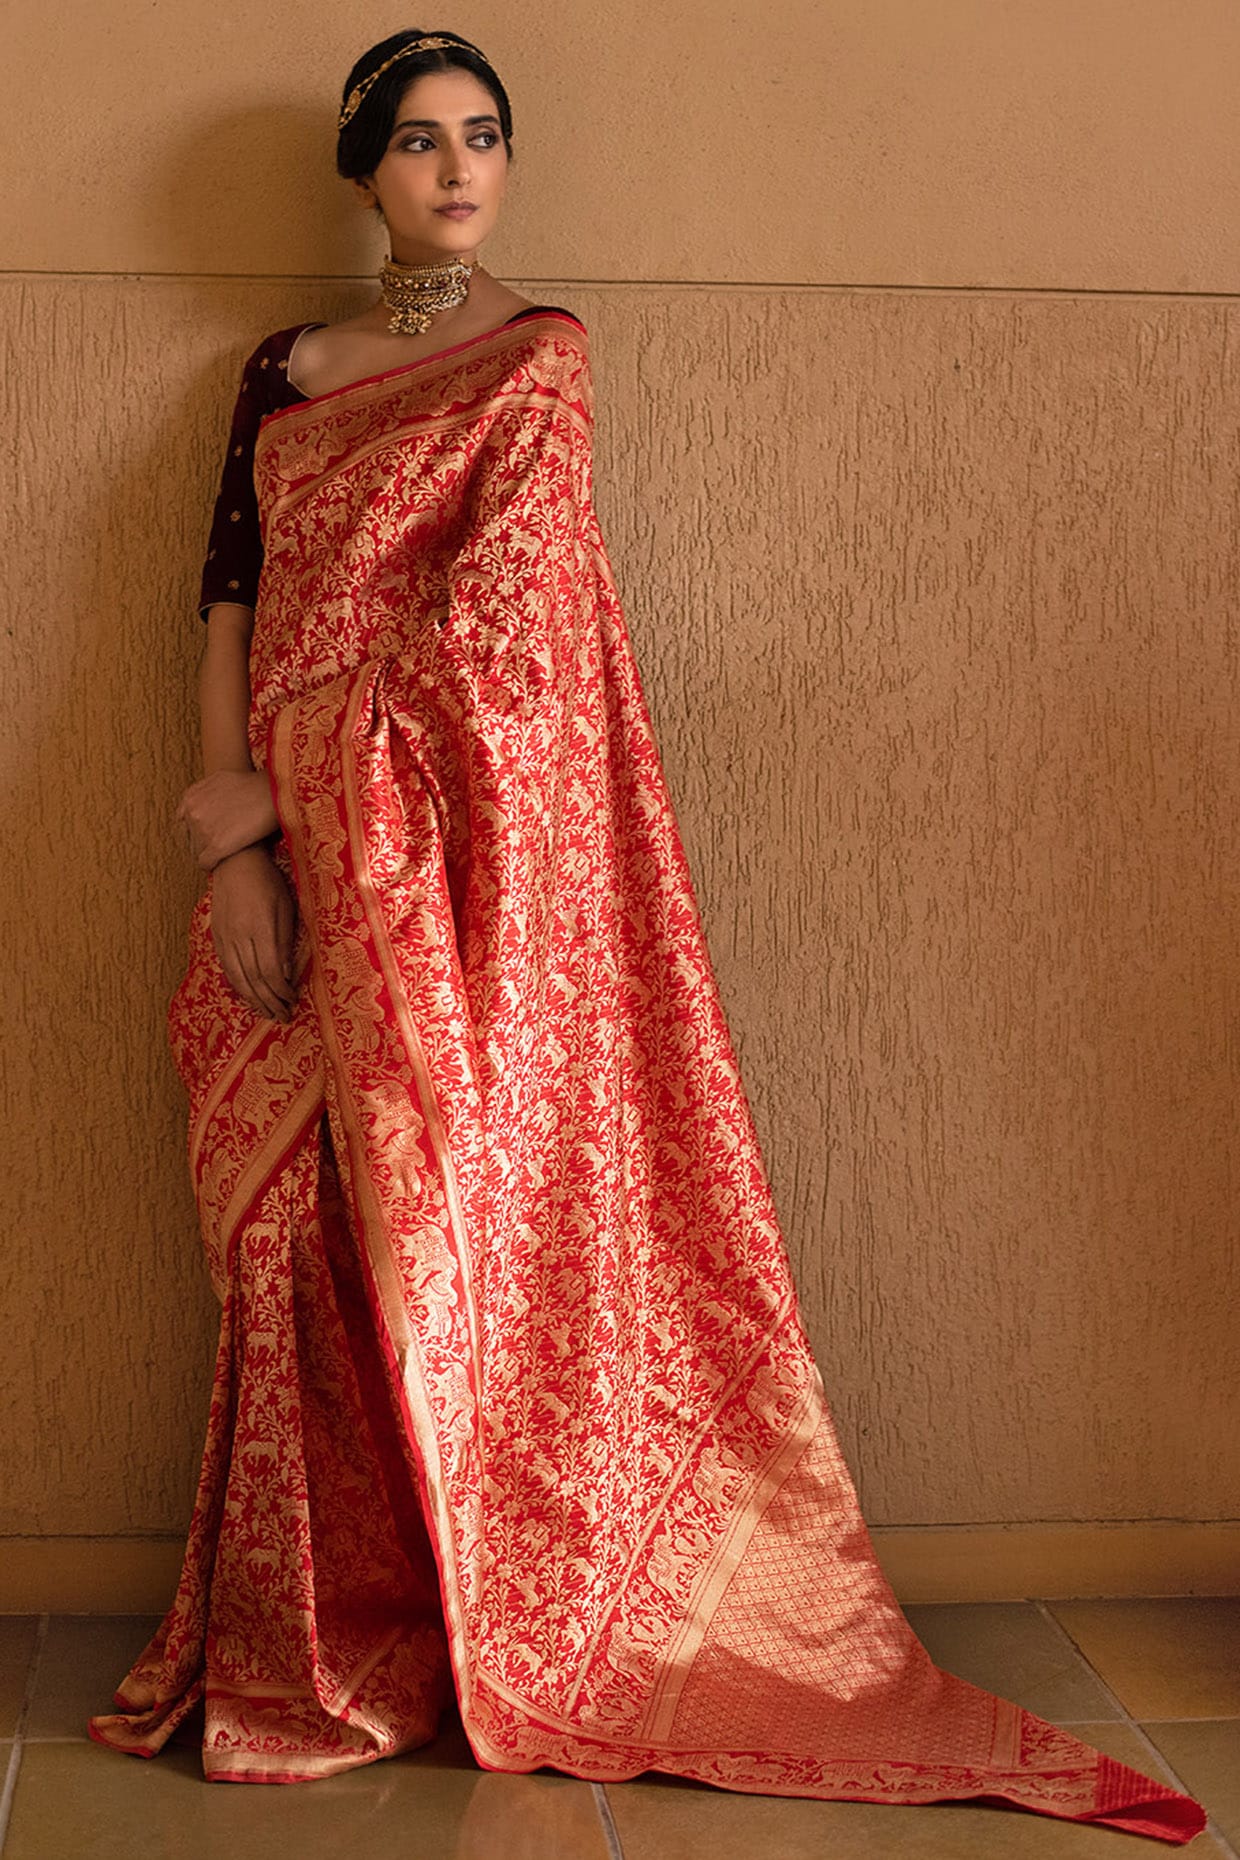 Banarasi Red Saree with Minimal Jewellery | Hair style on saree, Saree  models, Engagement looks